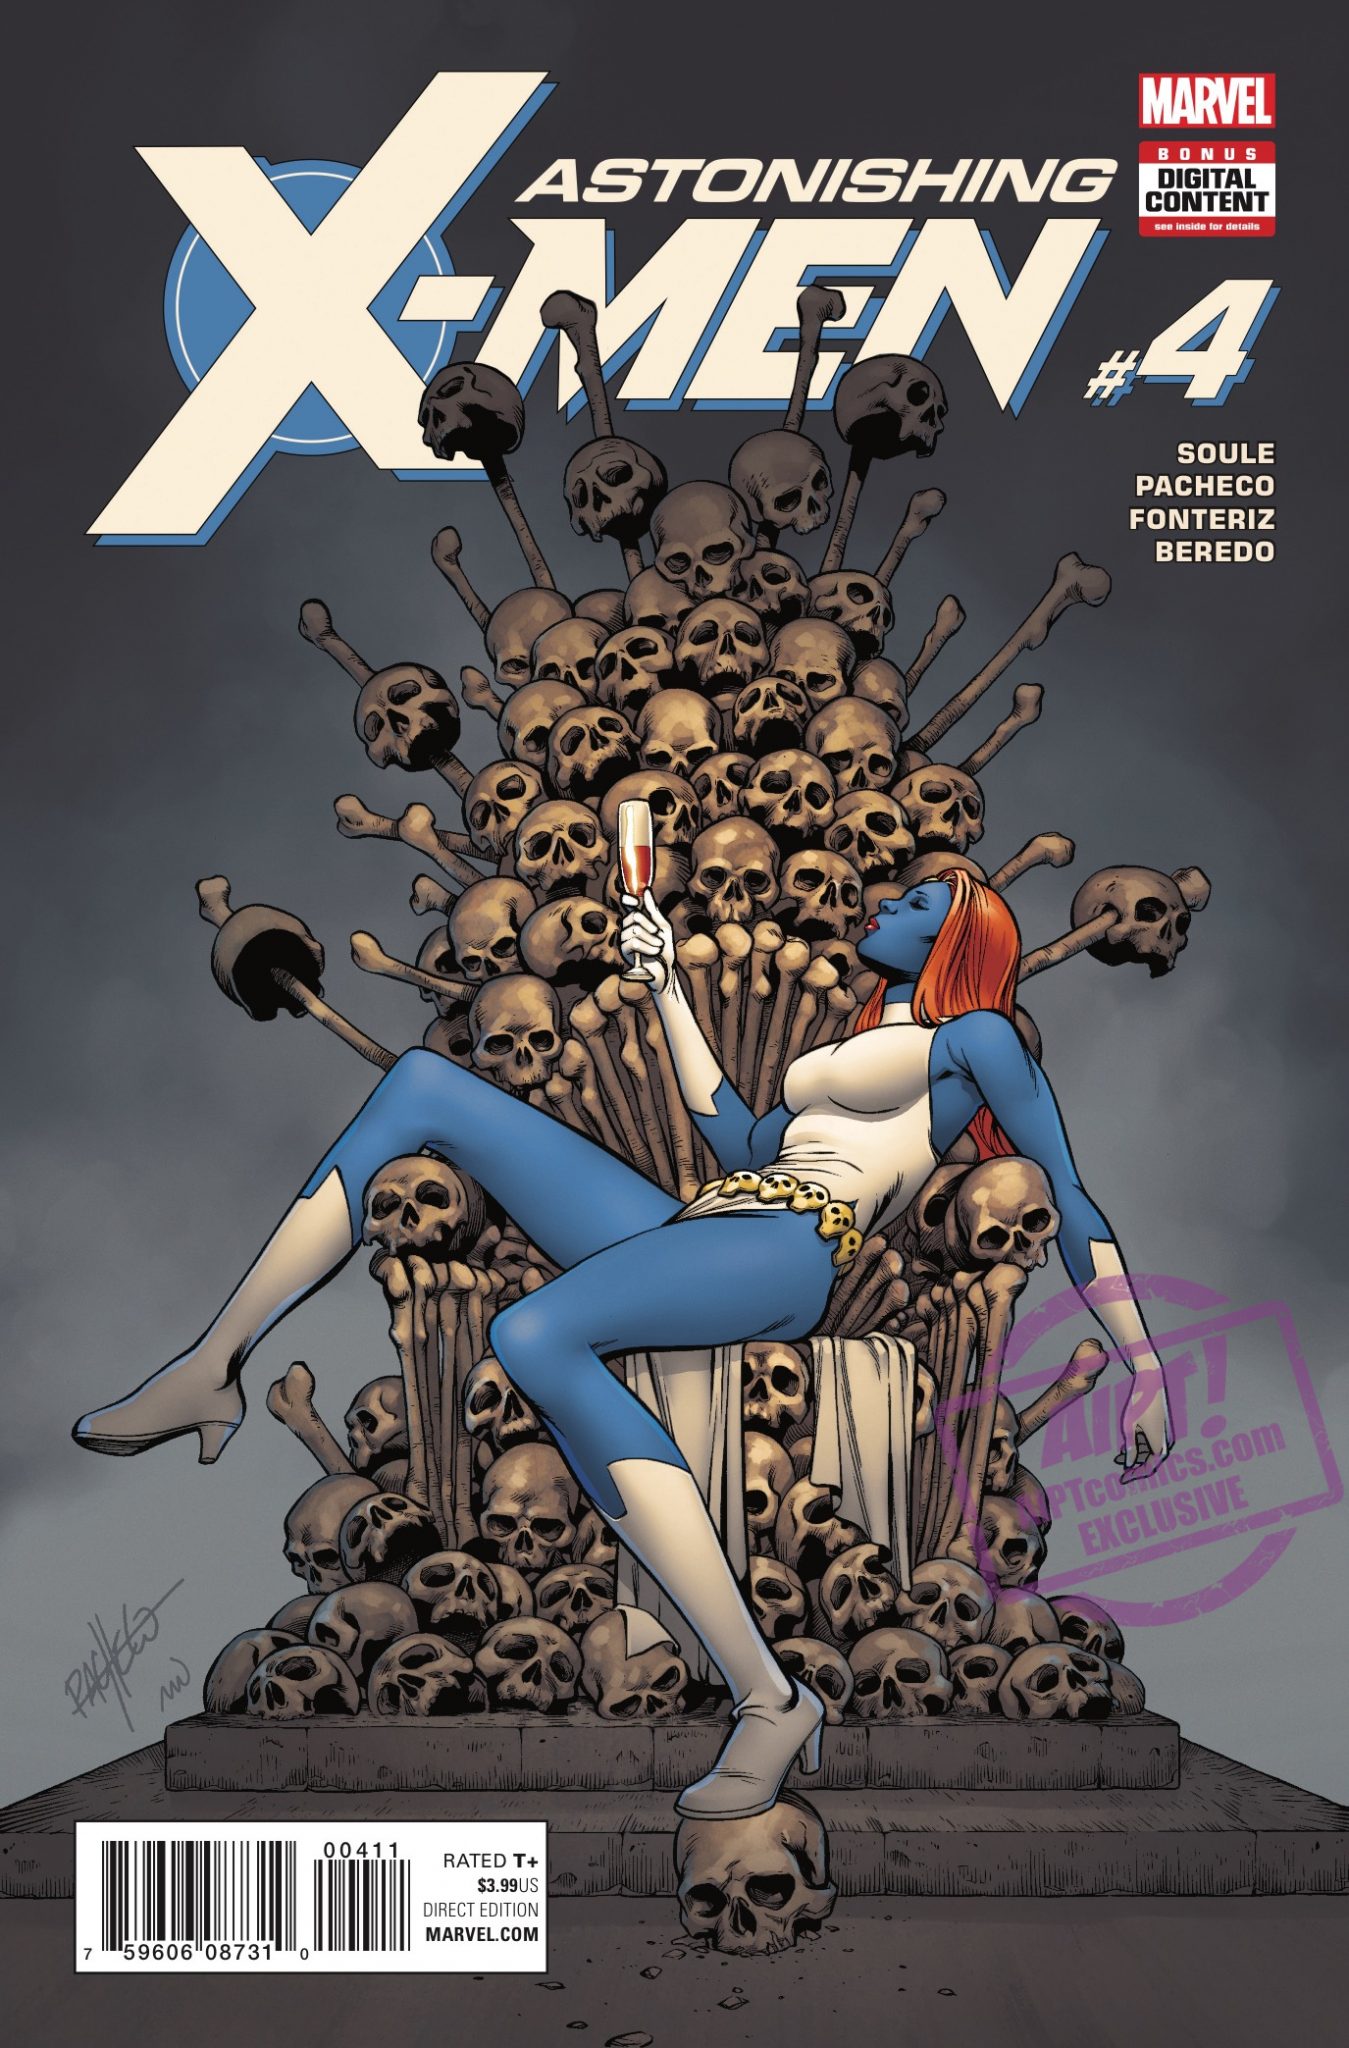 [EXCLUSIVE] Marvel Preview: Astonishing X-Men #4